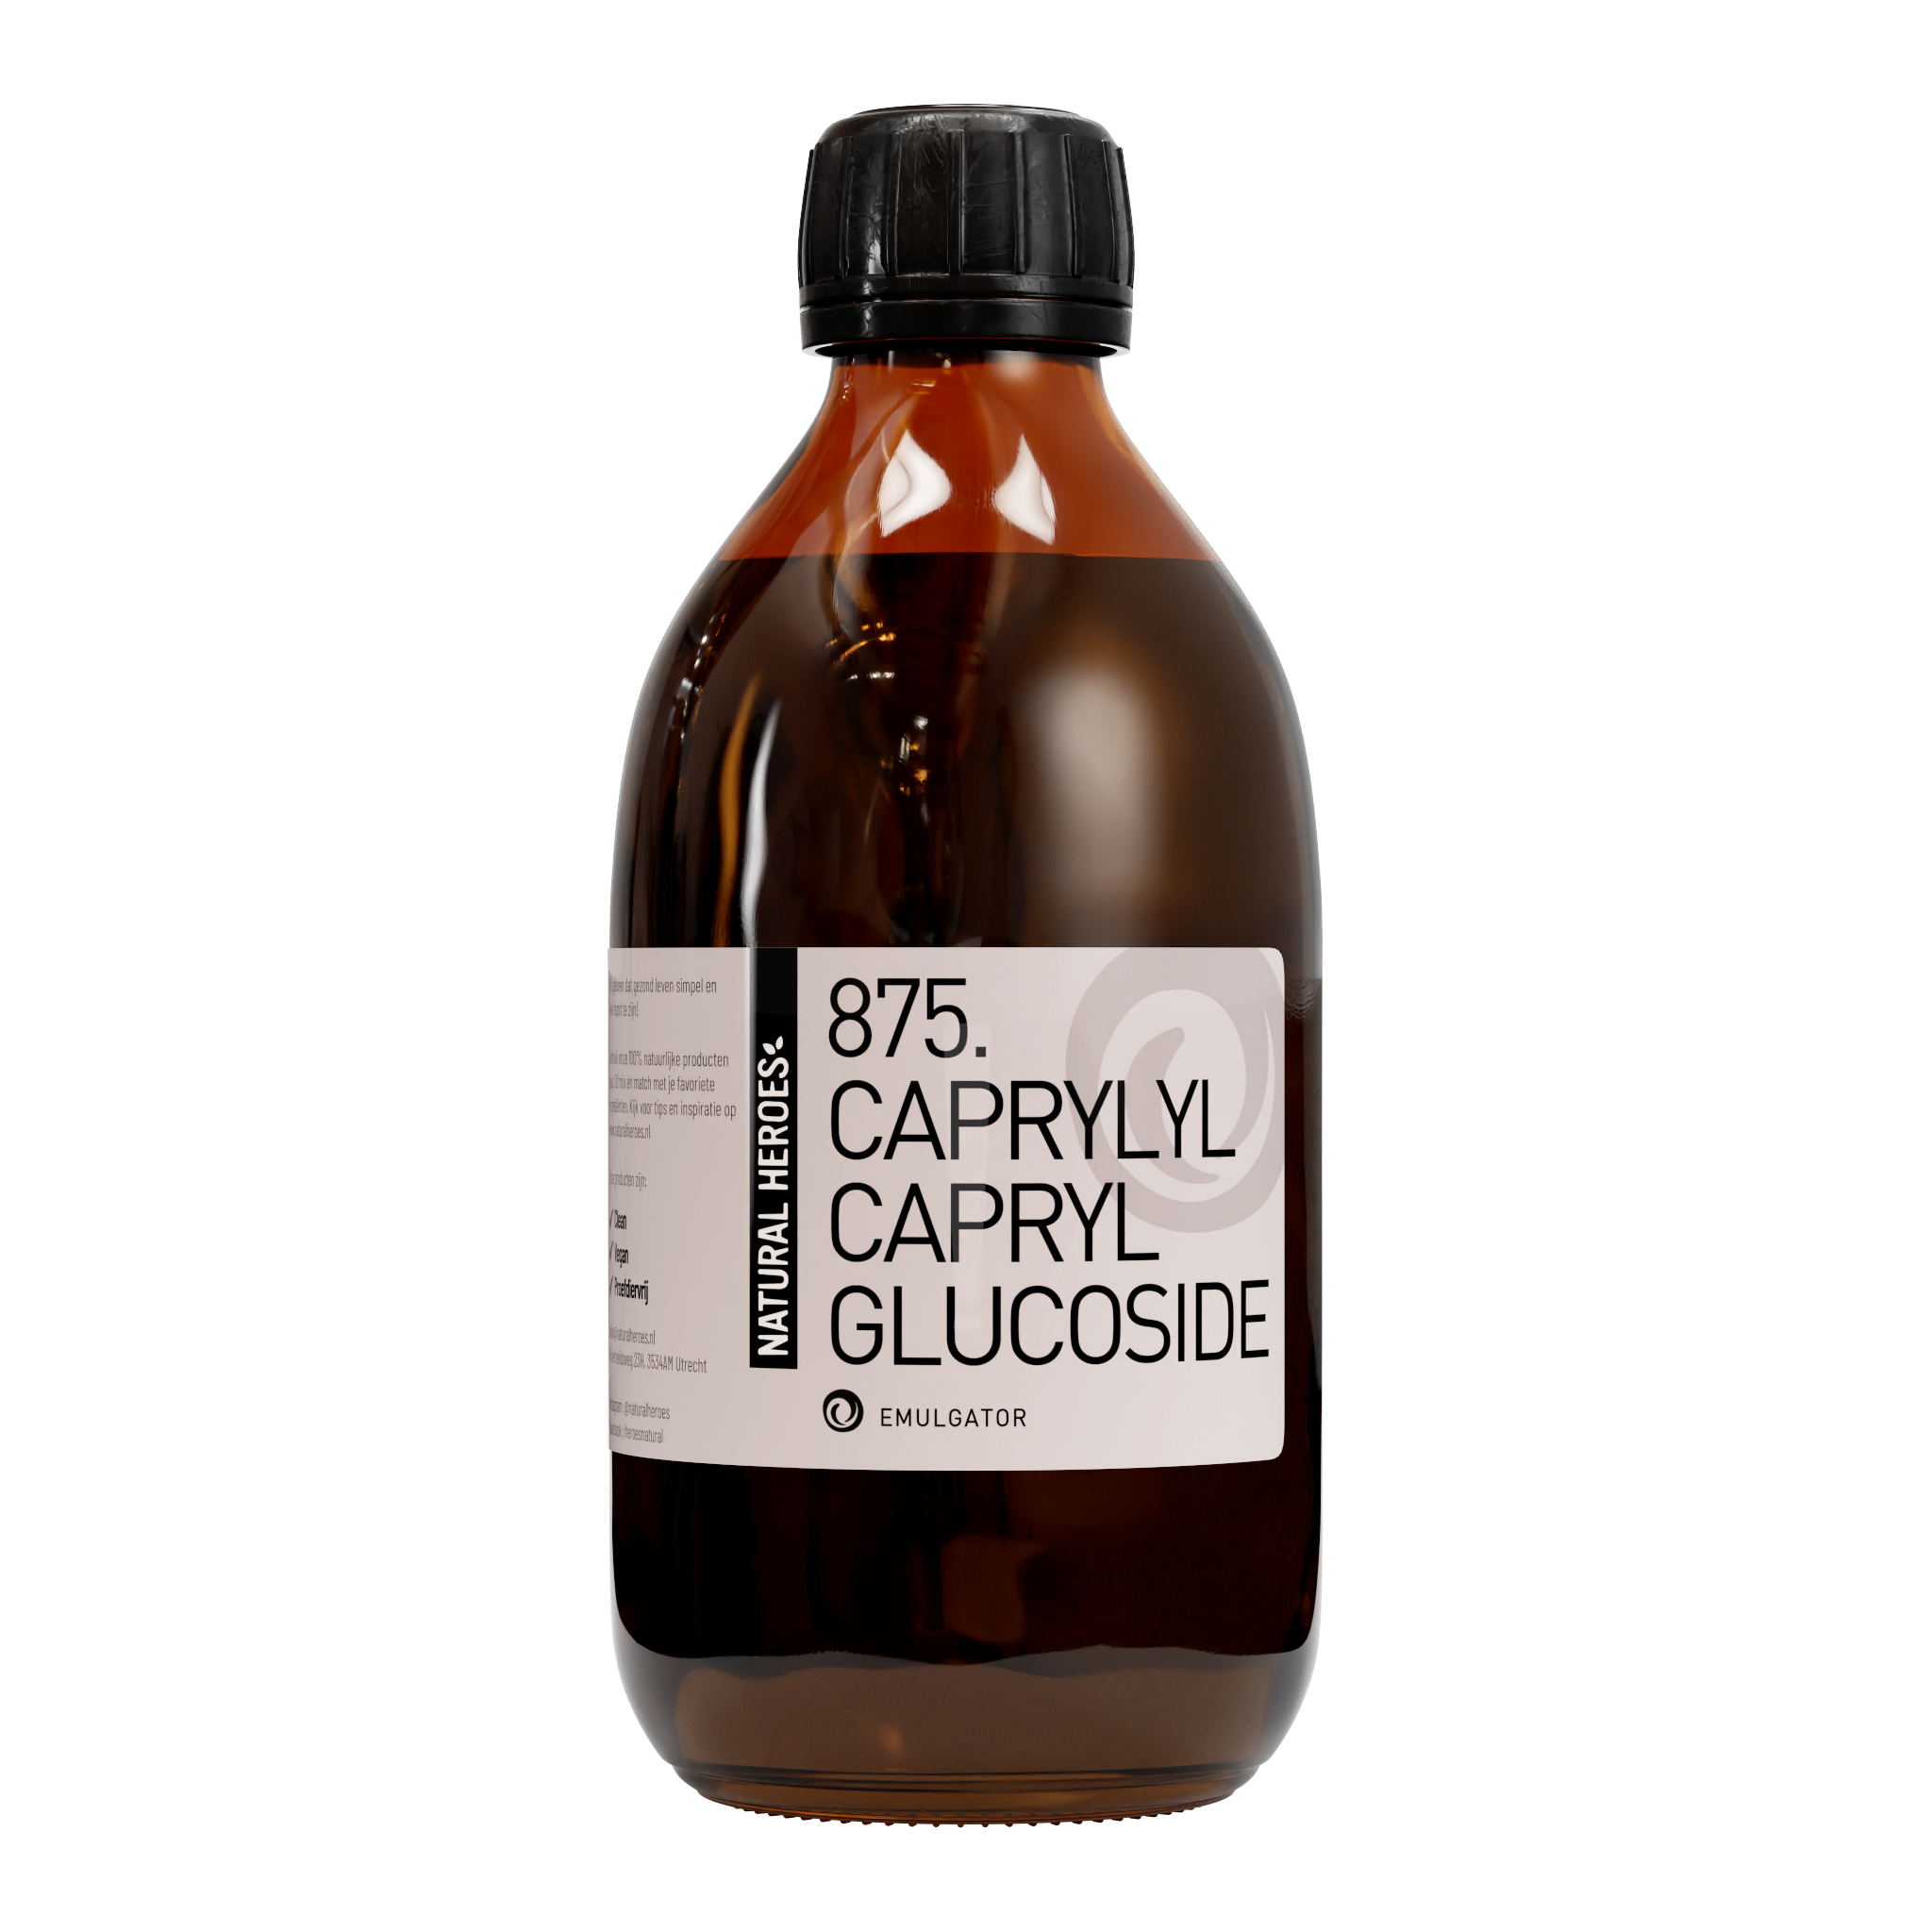 Caprylyl Capryl Glucoside - Vloeibaar Surfactant (Kleine bubbels) 300 ml